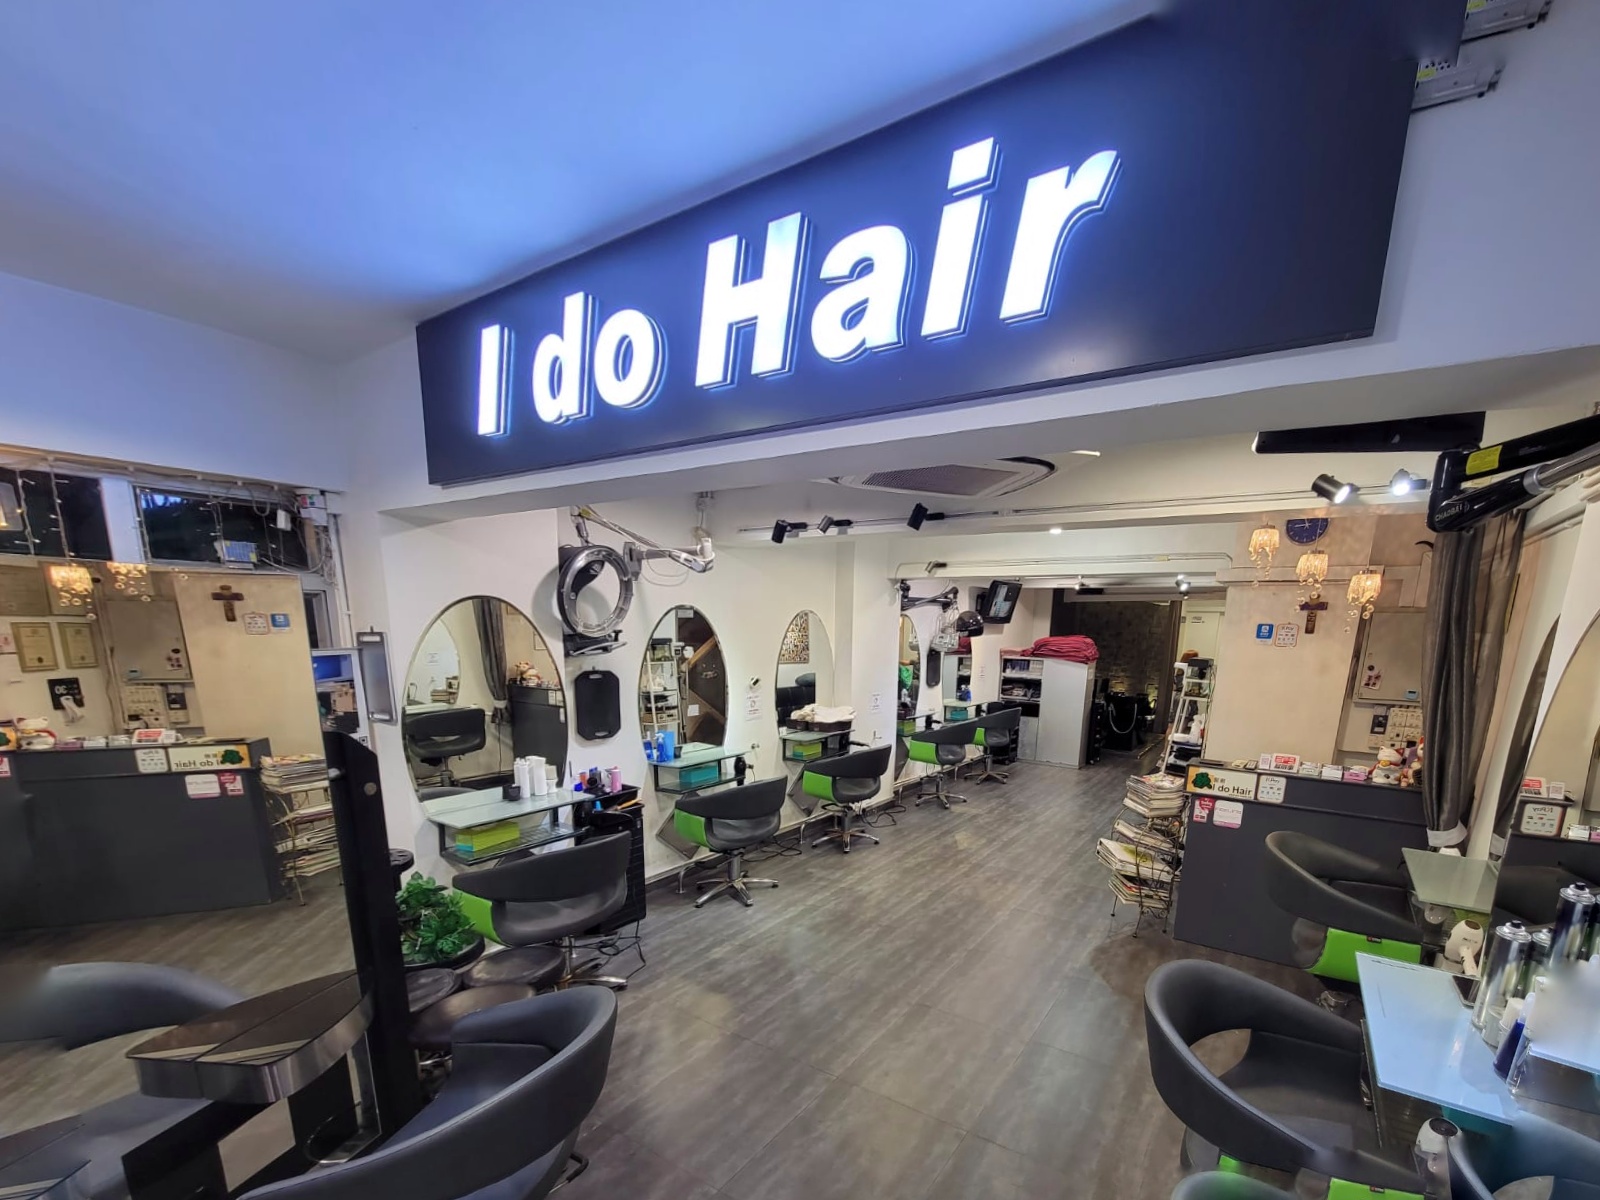 发型屋 Salon:  I do Hair ®